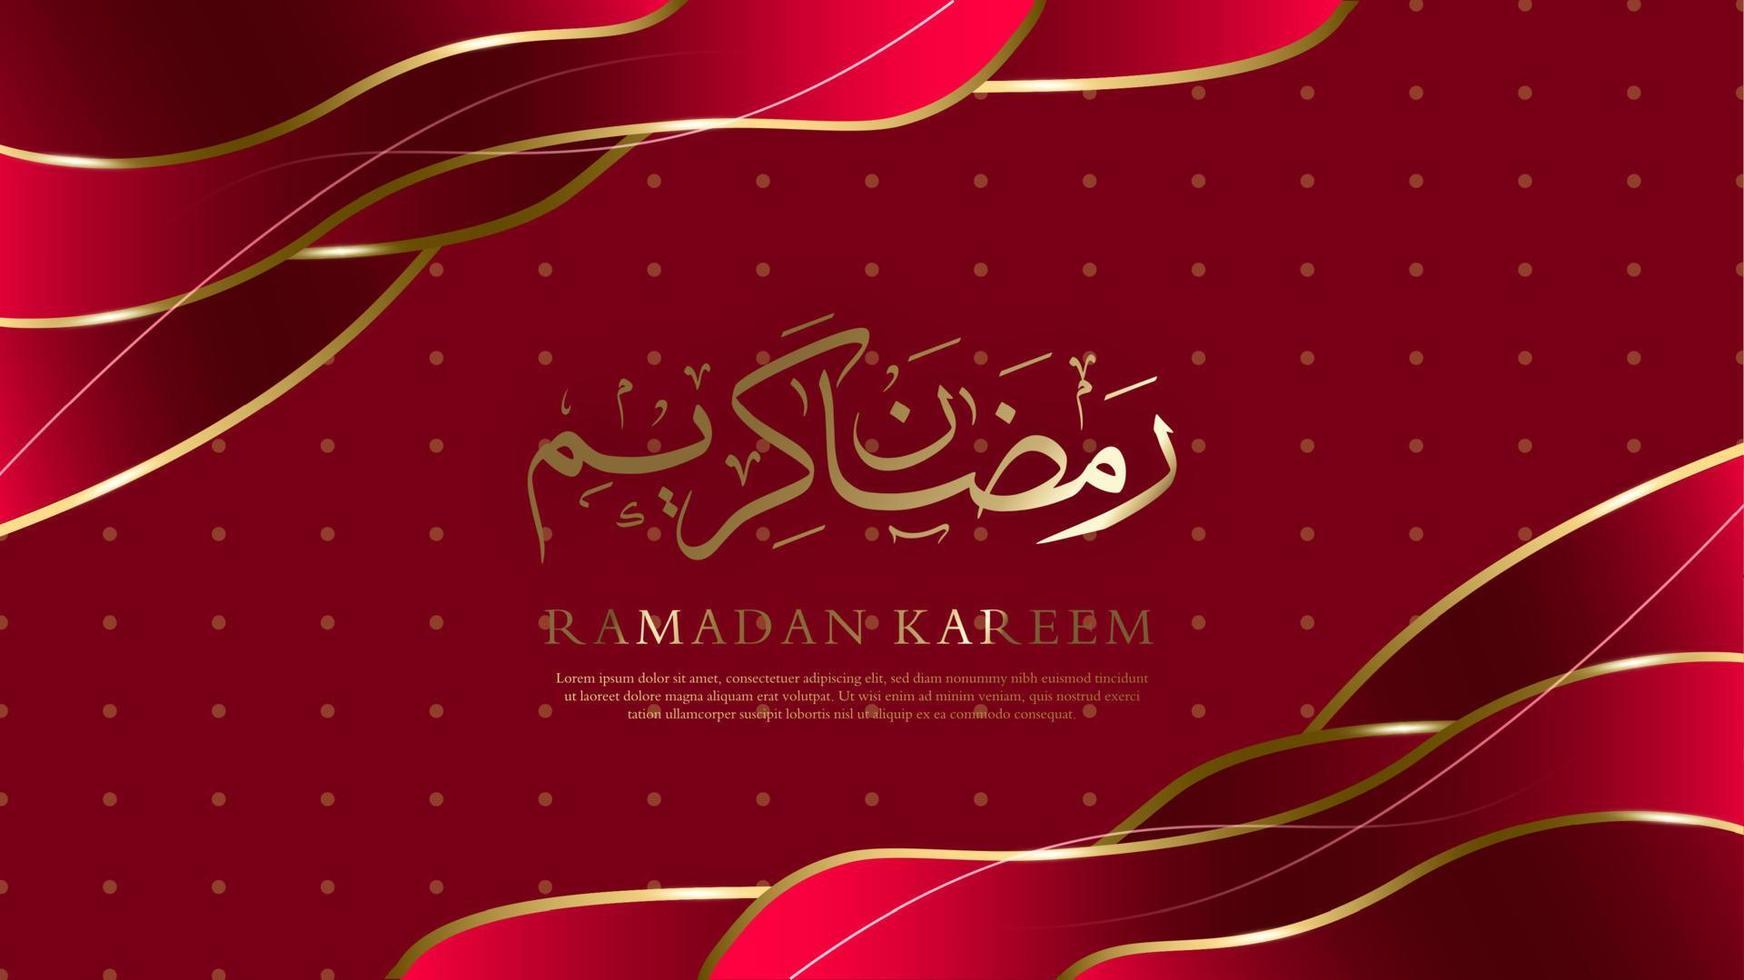 Creative Ramadan banner and background vector